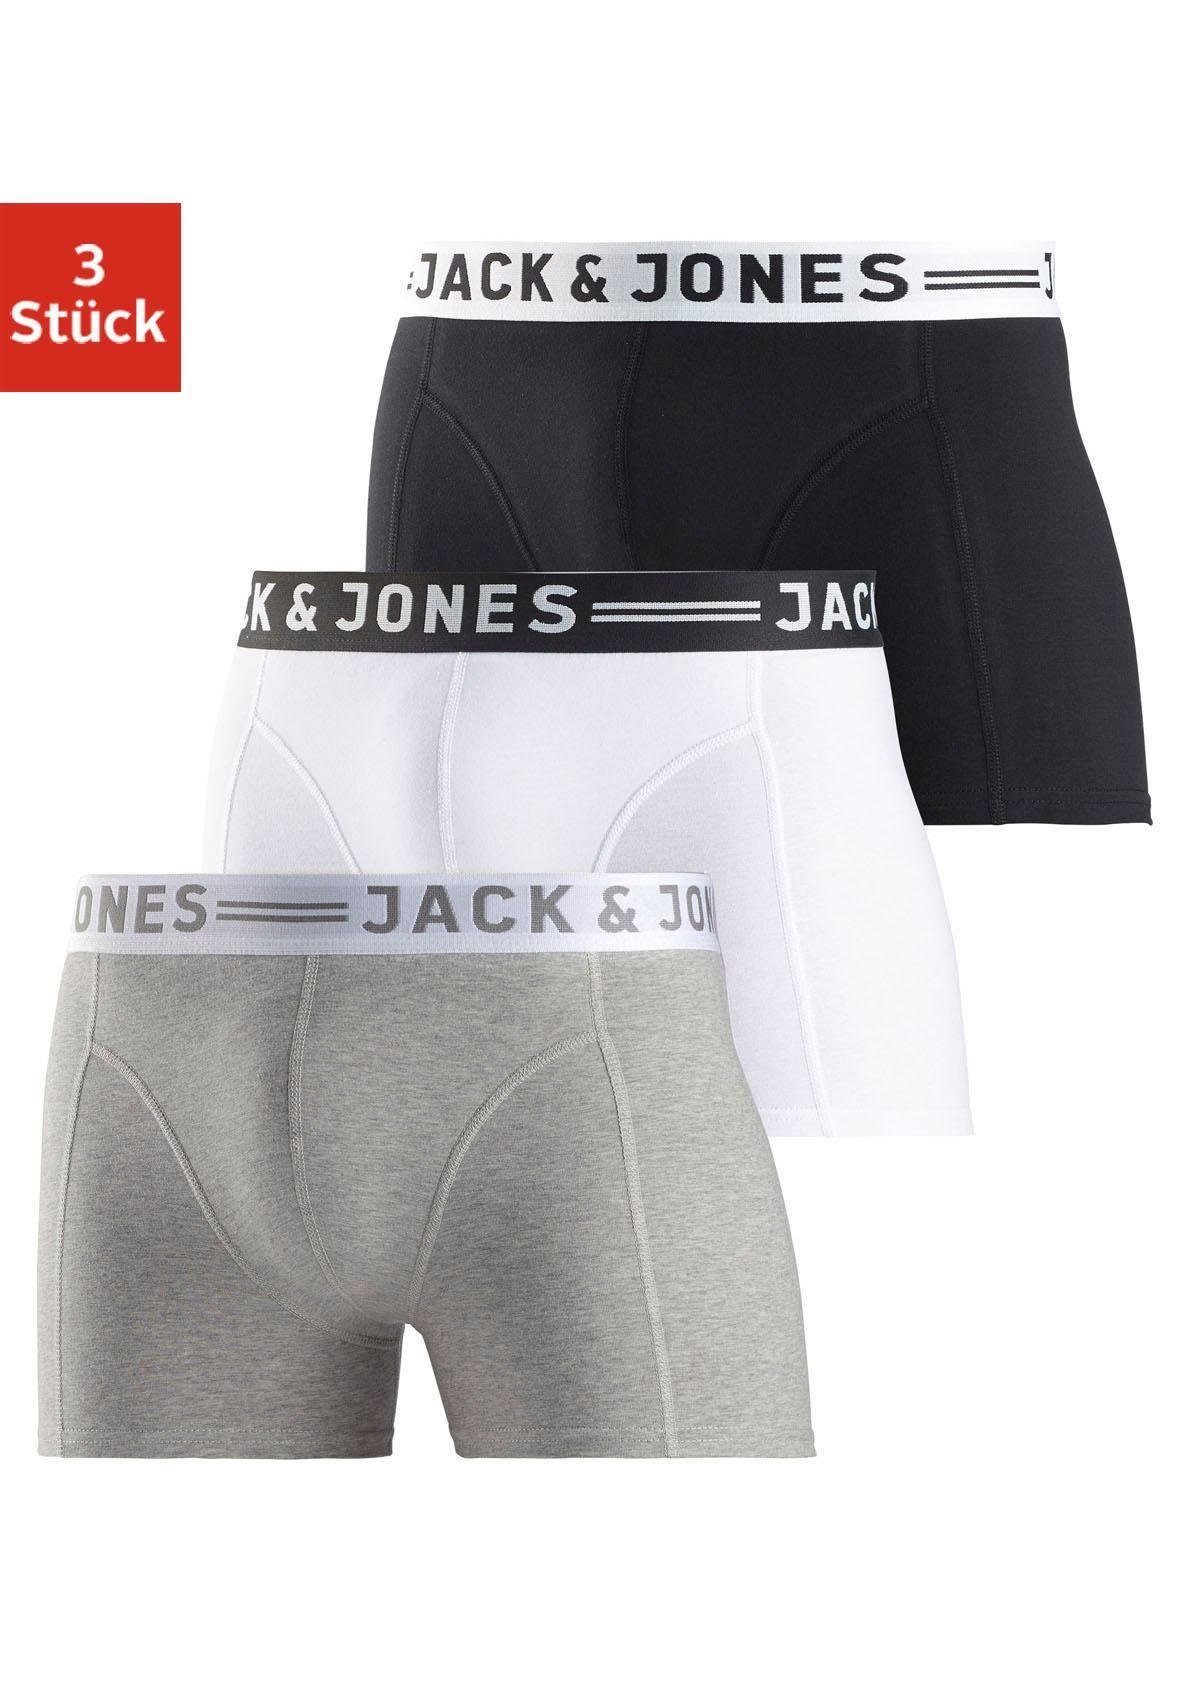 Sense 3-St) weiß, Jack & Trunks Jones schwarz, (Packung, grau-meliert Boxer